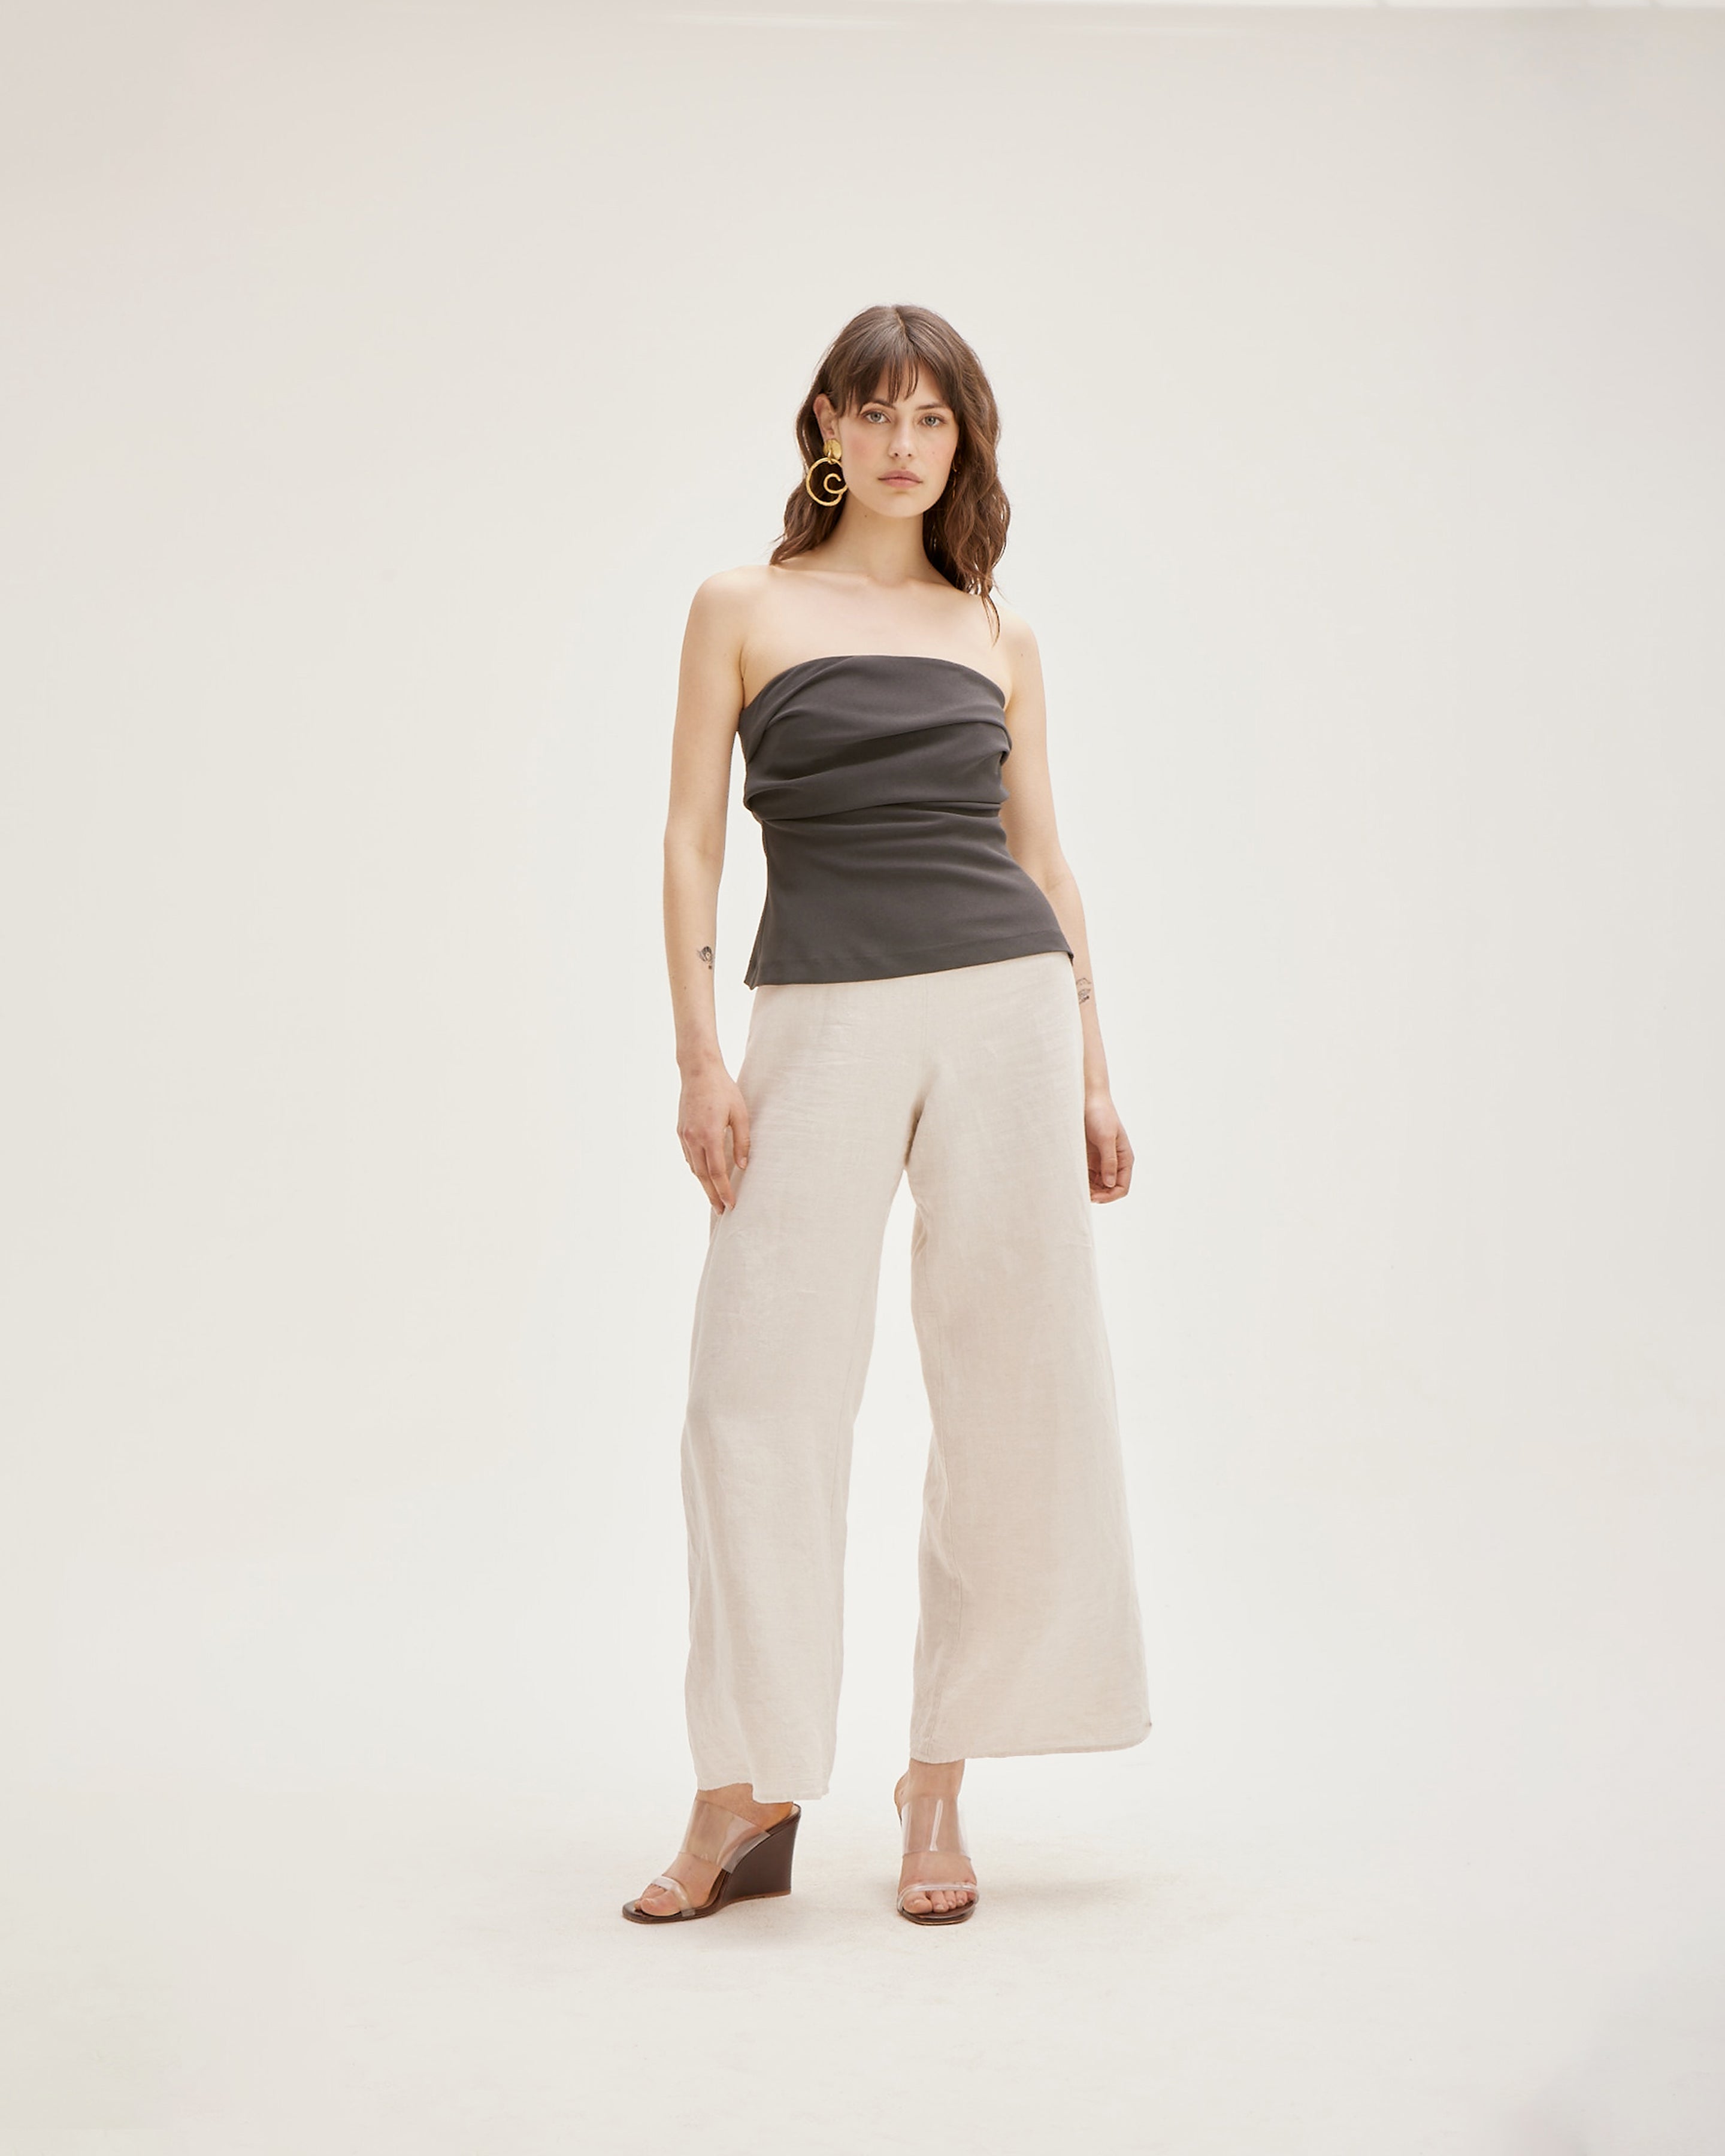 White Linen Trousers Size Petite for Women for sale  eBay